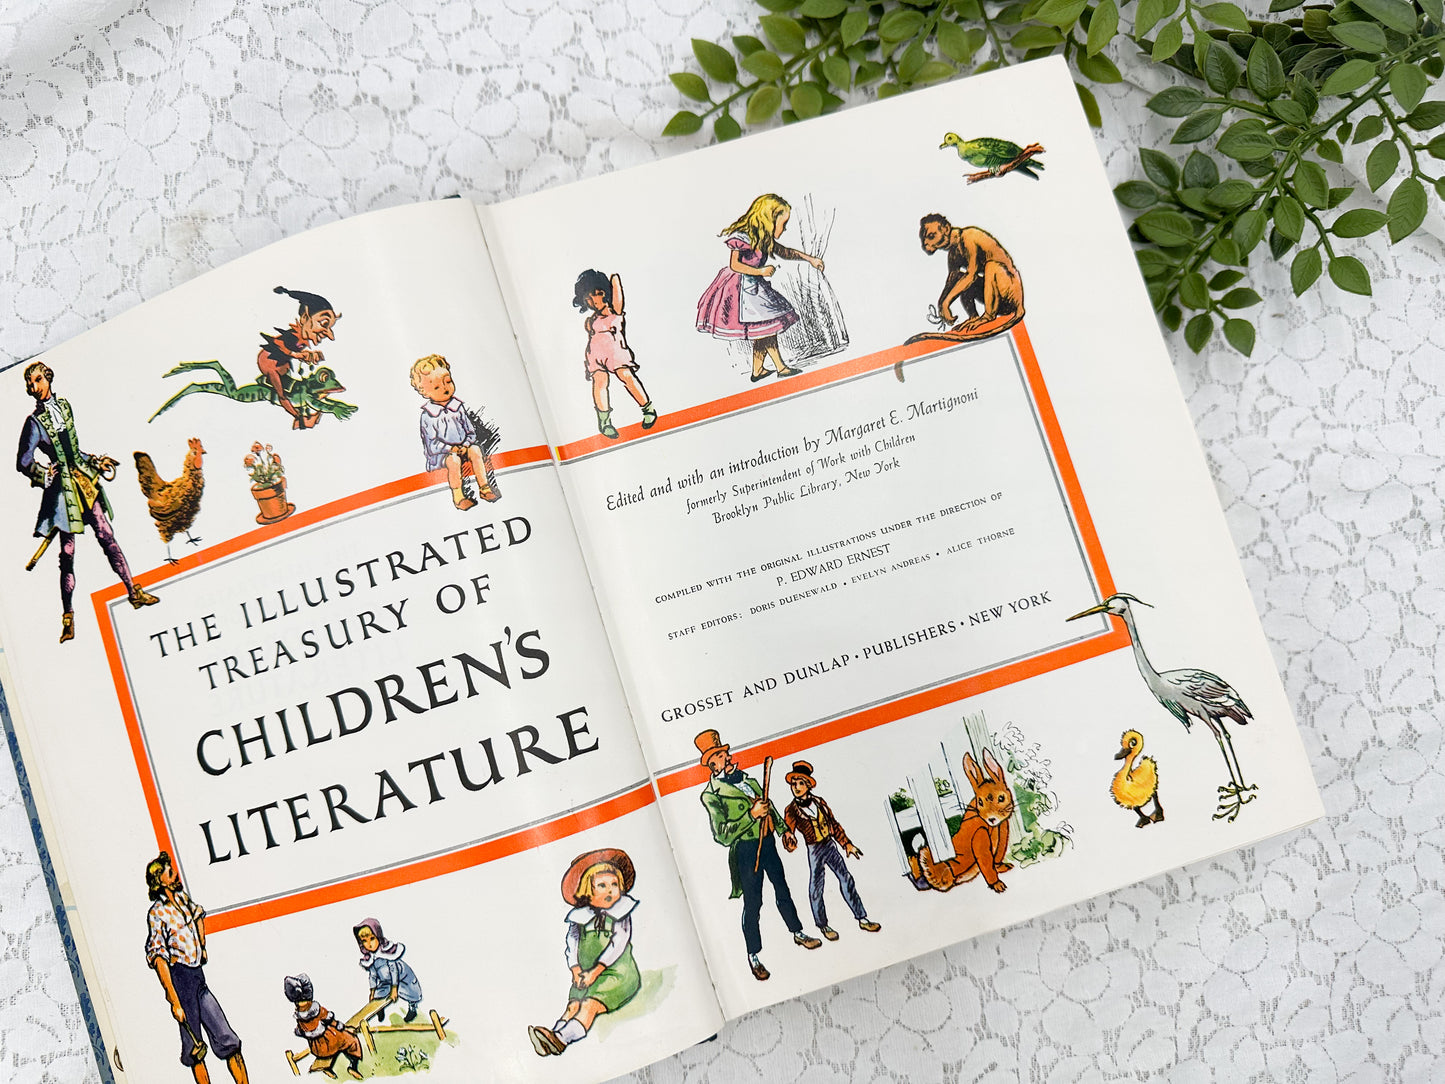 Illustrated Treasury of Childrens Litature